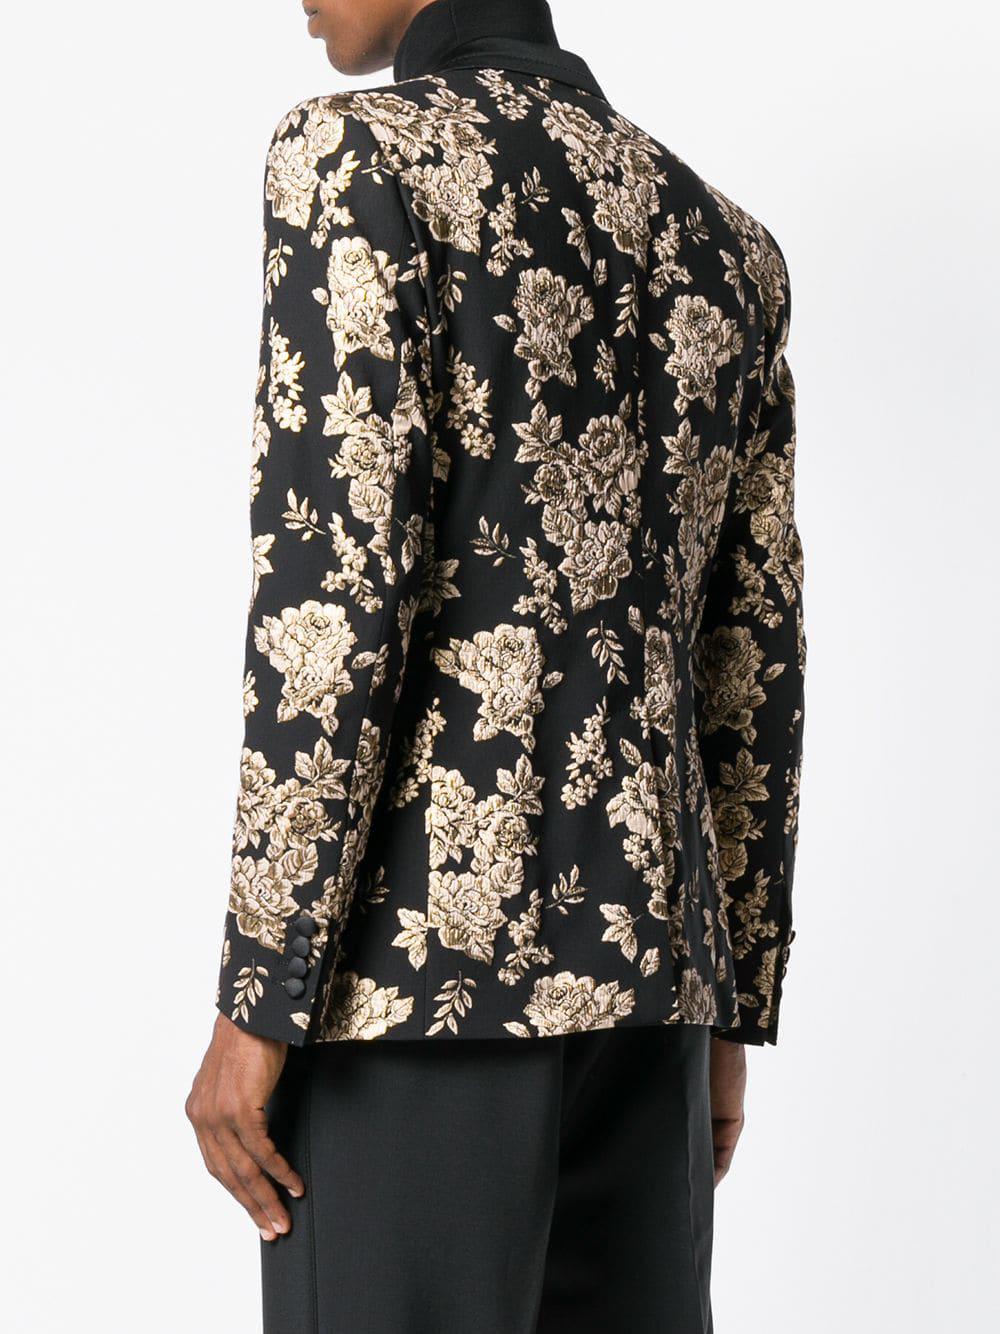 Lyst - Dolce & Gabbana Floral Jacquard Blazer in Black for Men